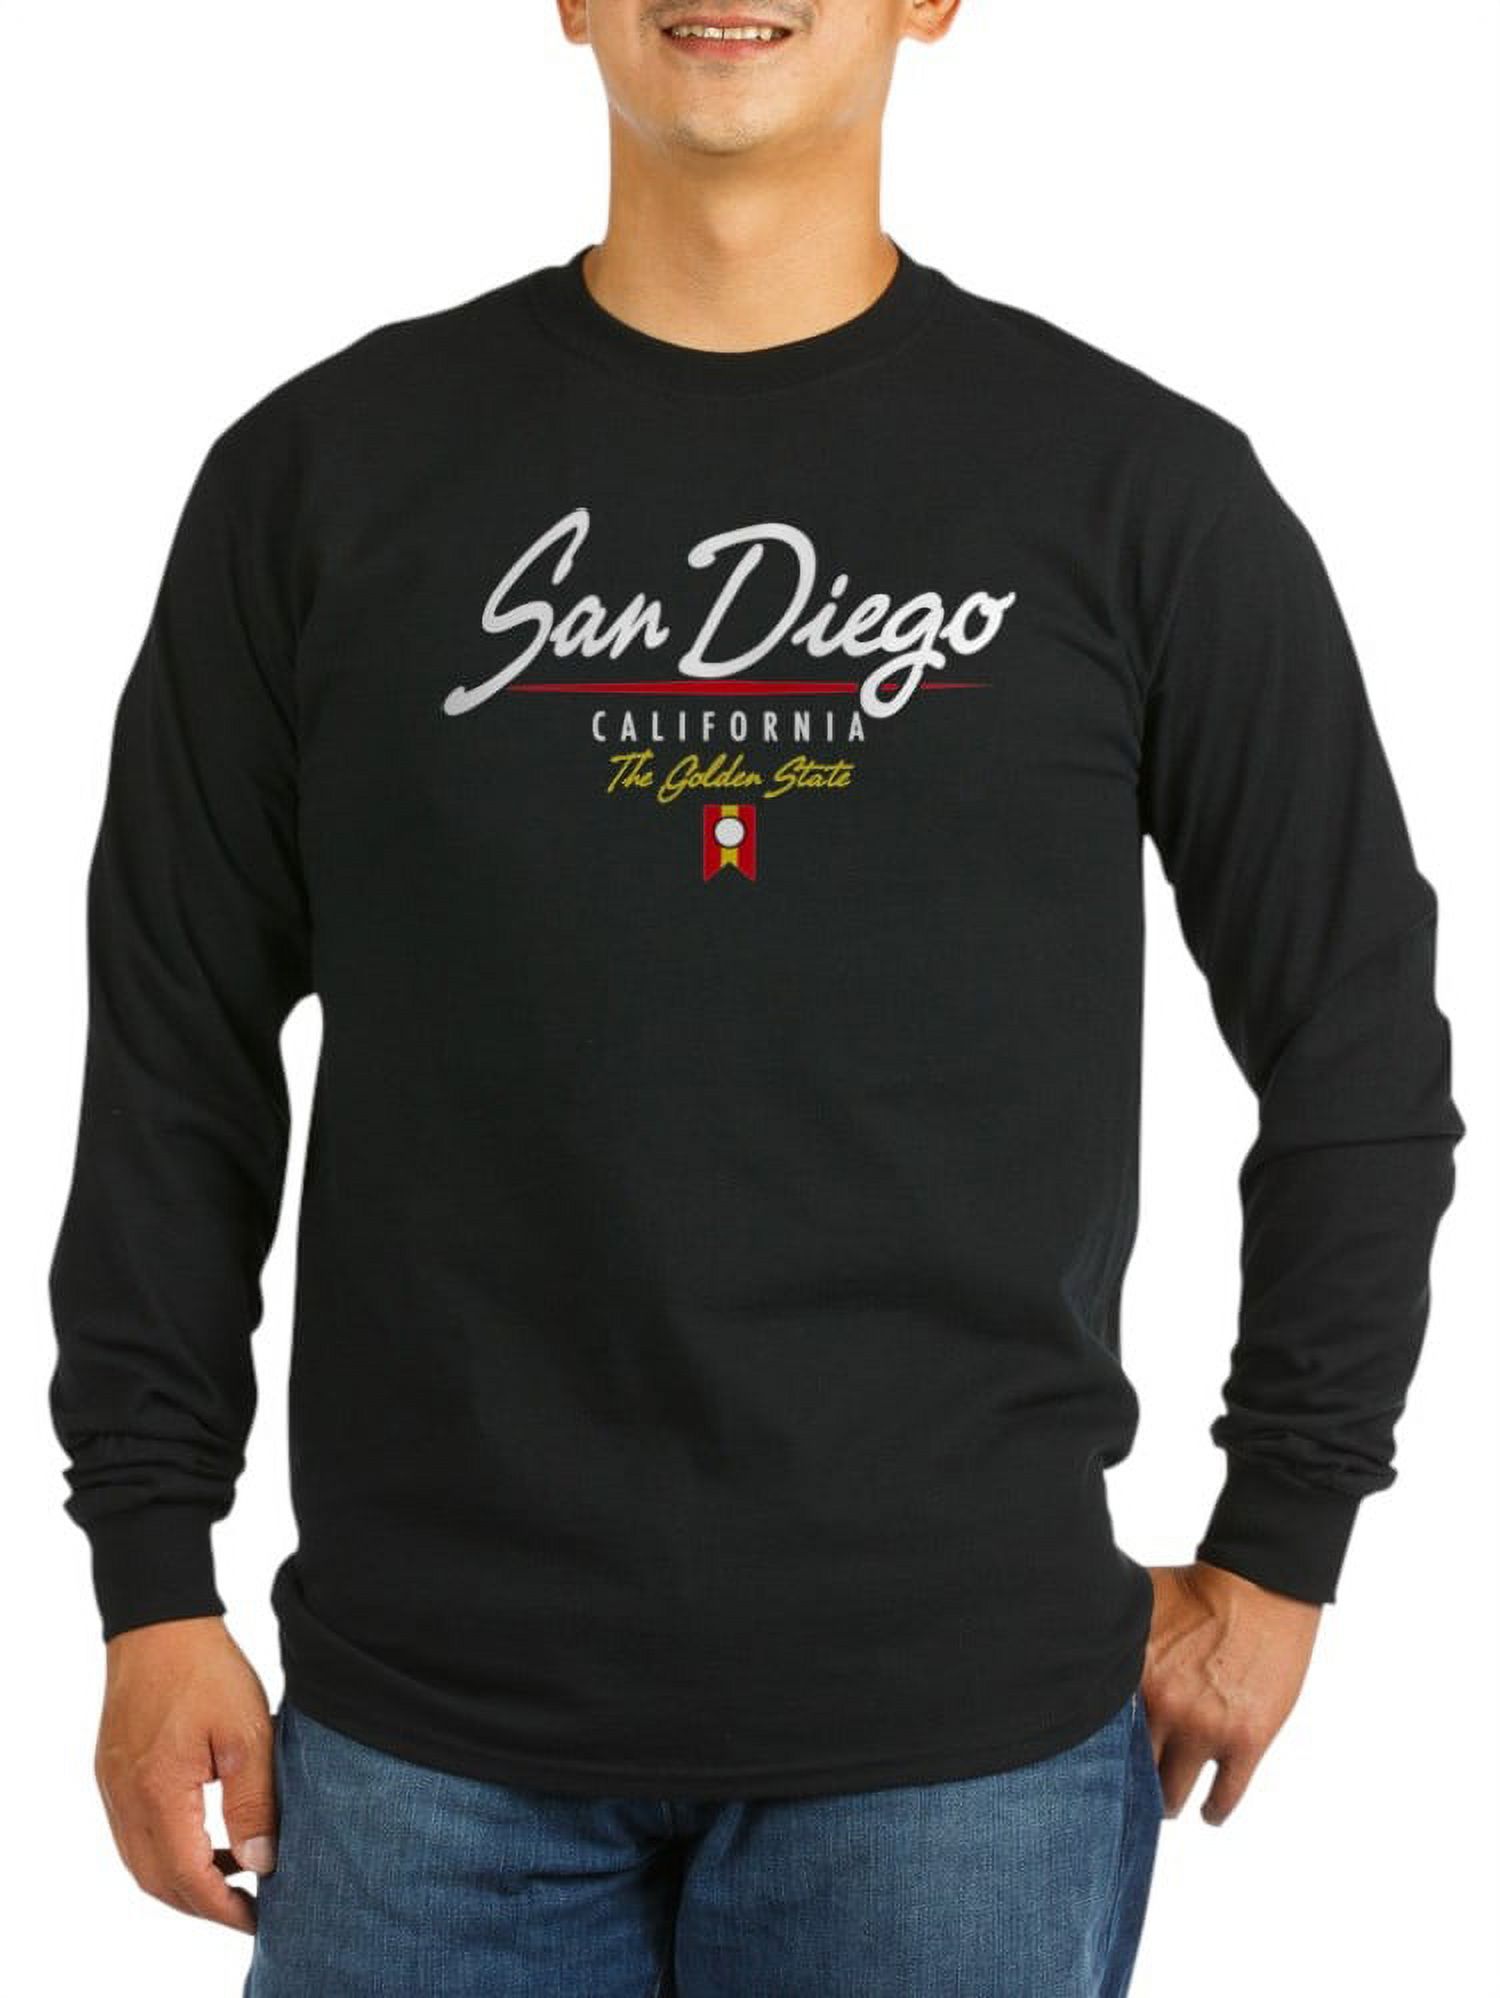 CafePress - San Diego Script - Long Sleeve Dark T-Shirt - image 1 of 1